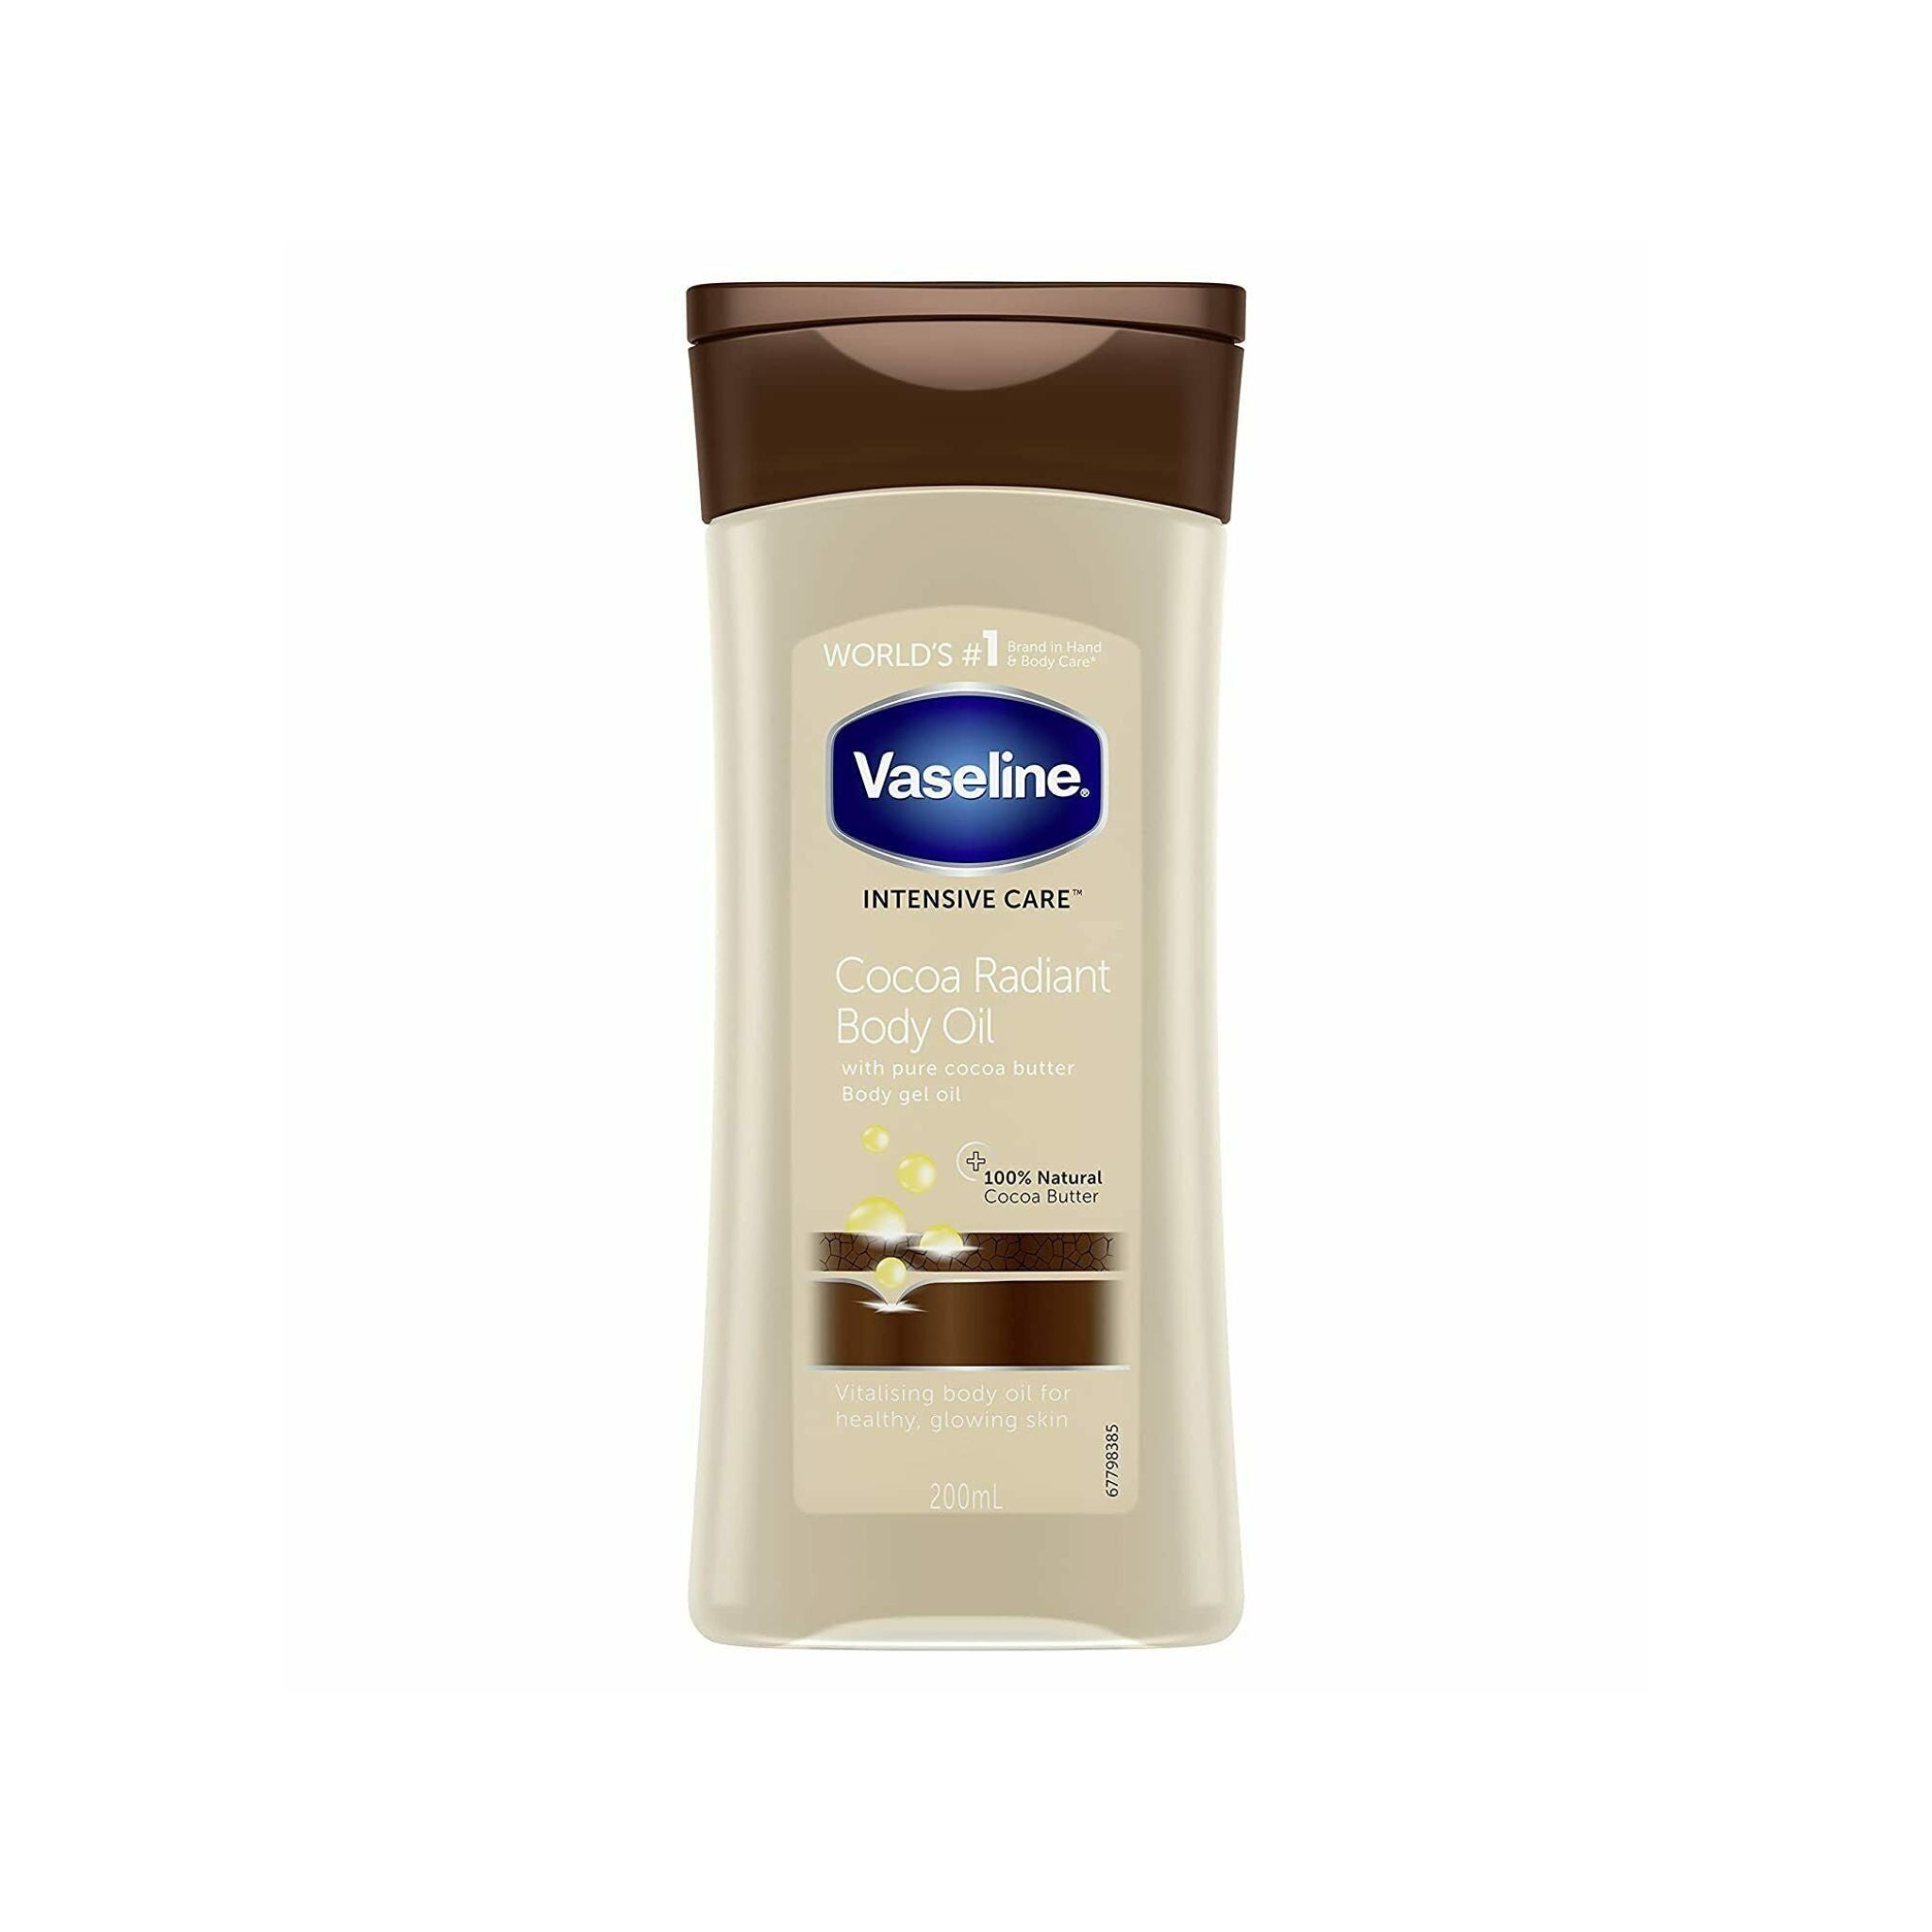 Vaseline Cocoa Radiant Body Gel Oil for healthy glowing skin